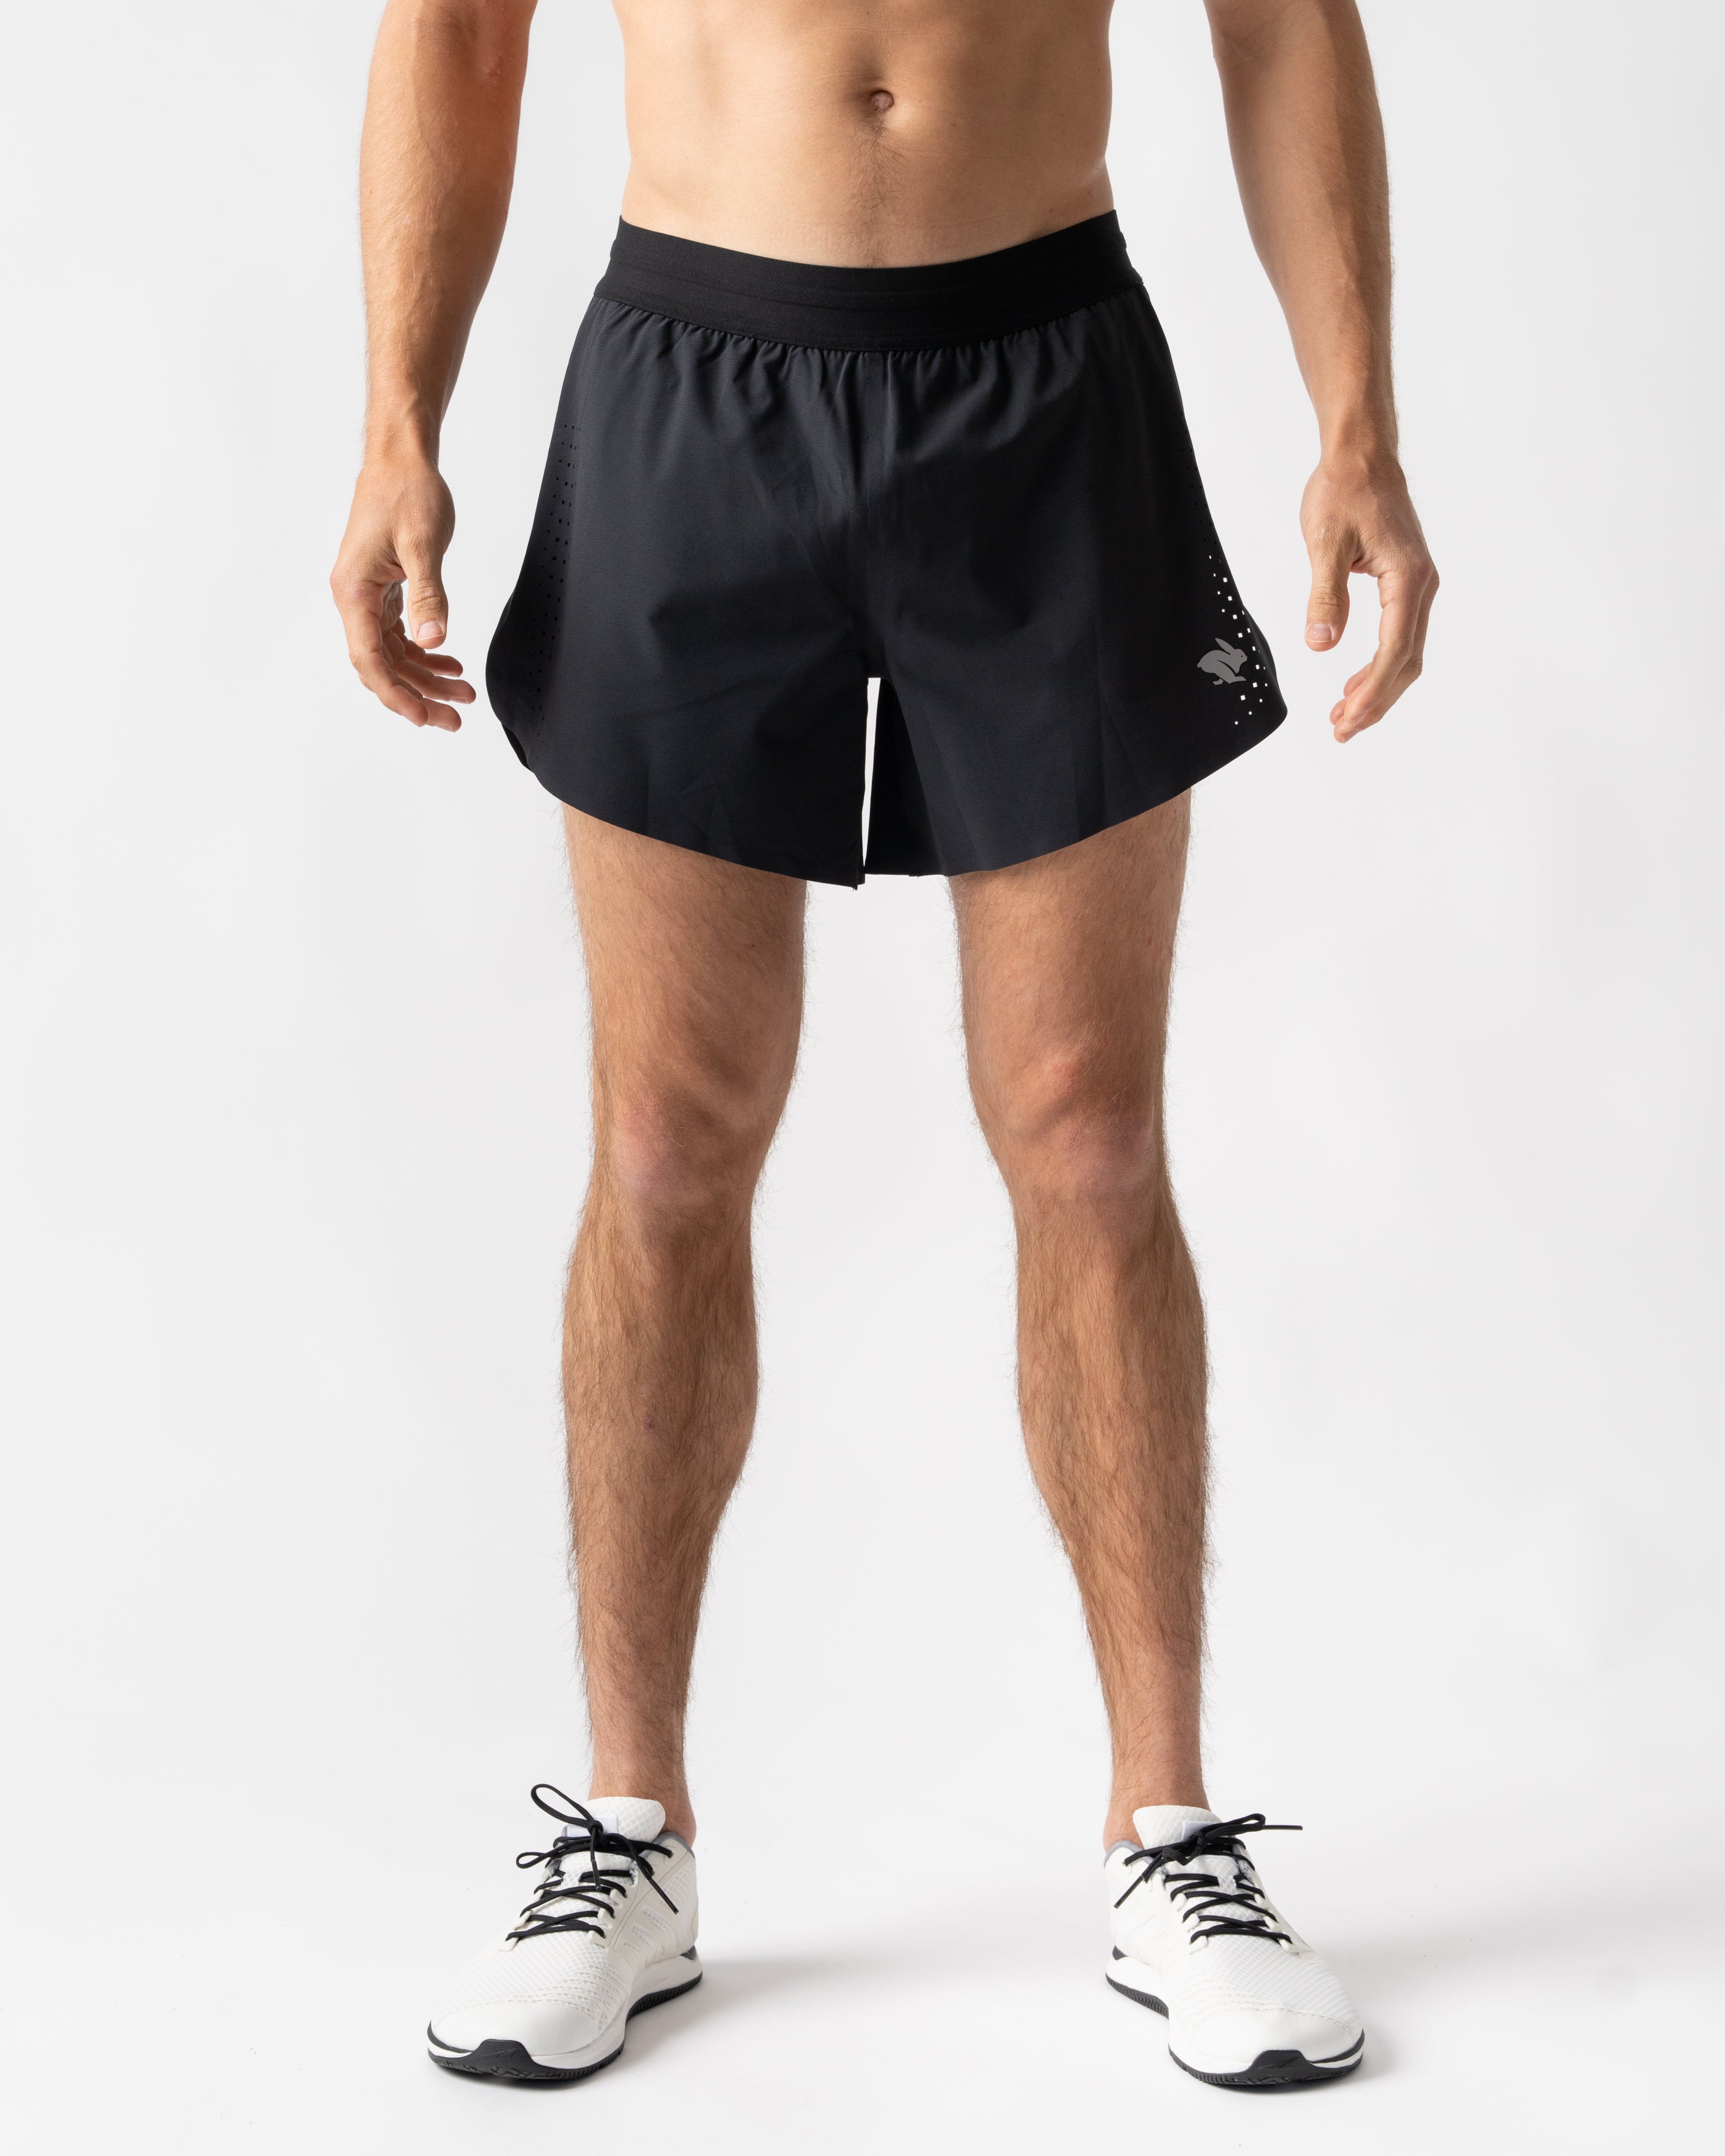 Men's Running Shorts: Split, 5-Inch & Compression